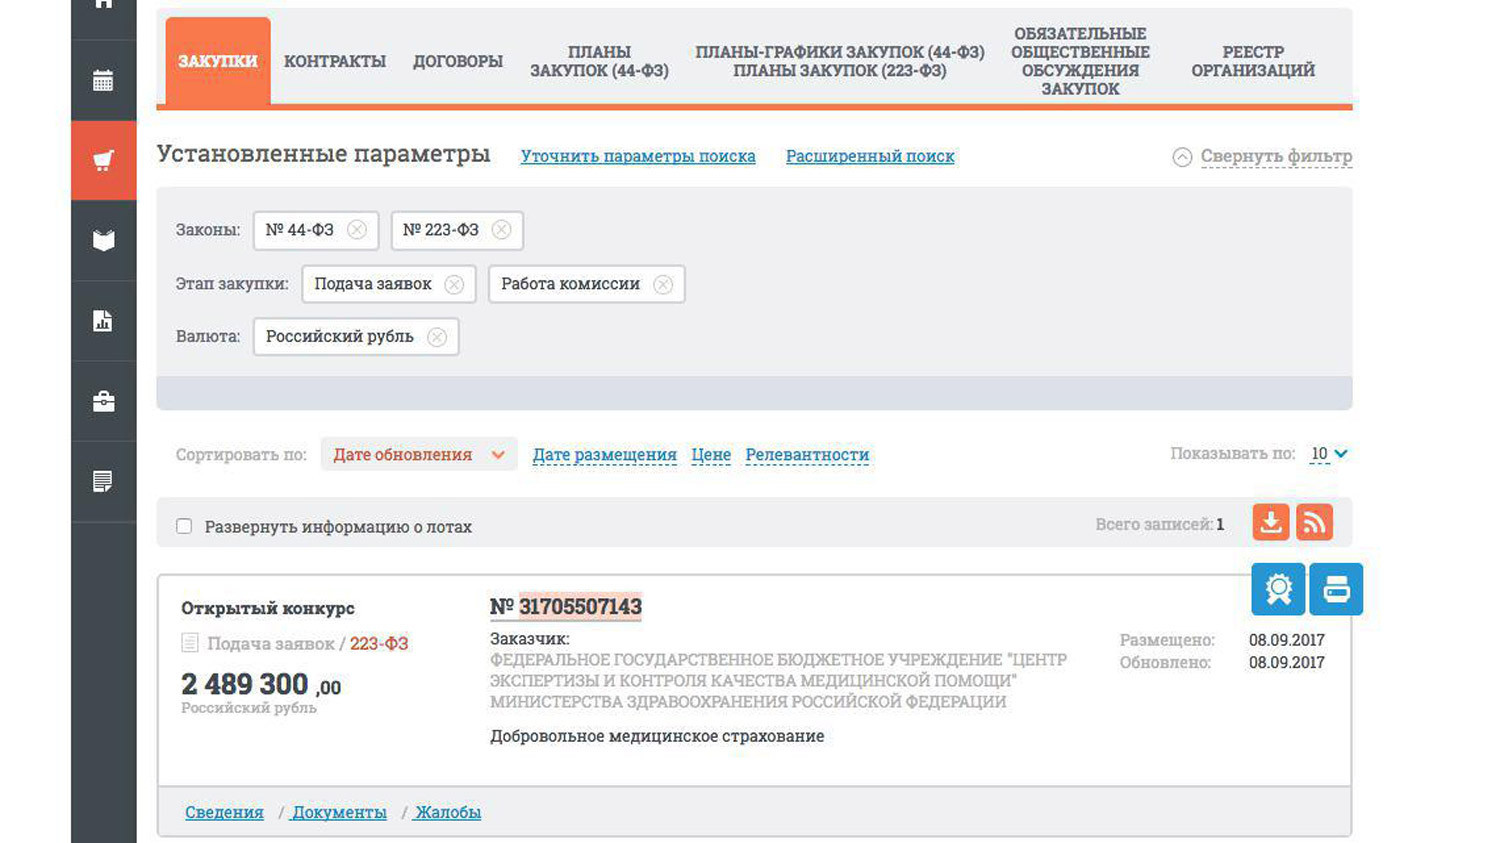 <p>Фото: &copy;<a href="http://zakupki.gov.ru/epz/order/quicksearch/search_eis.html?searchString=31705507143" target="_blank">&nbsp;zakupki.gov.ru</a></p>